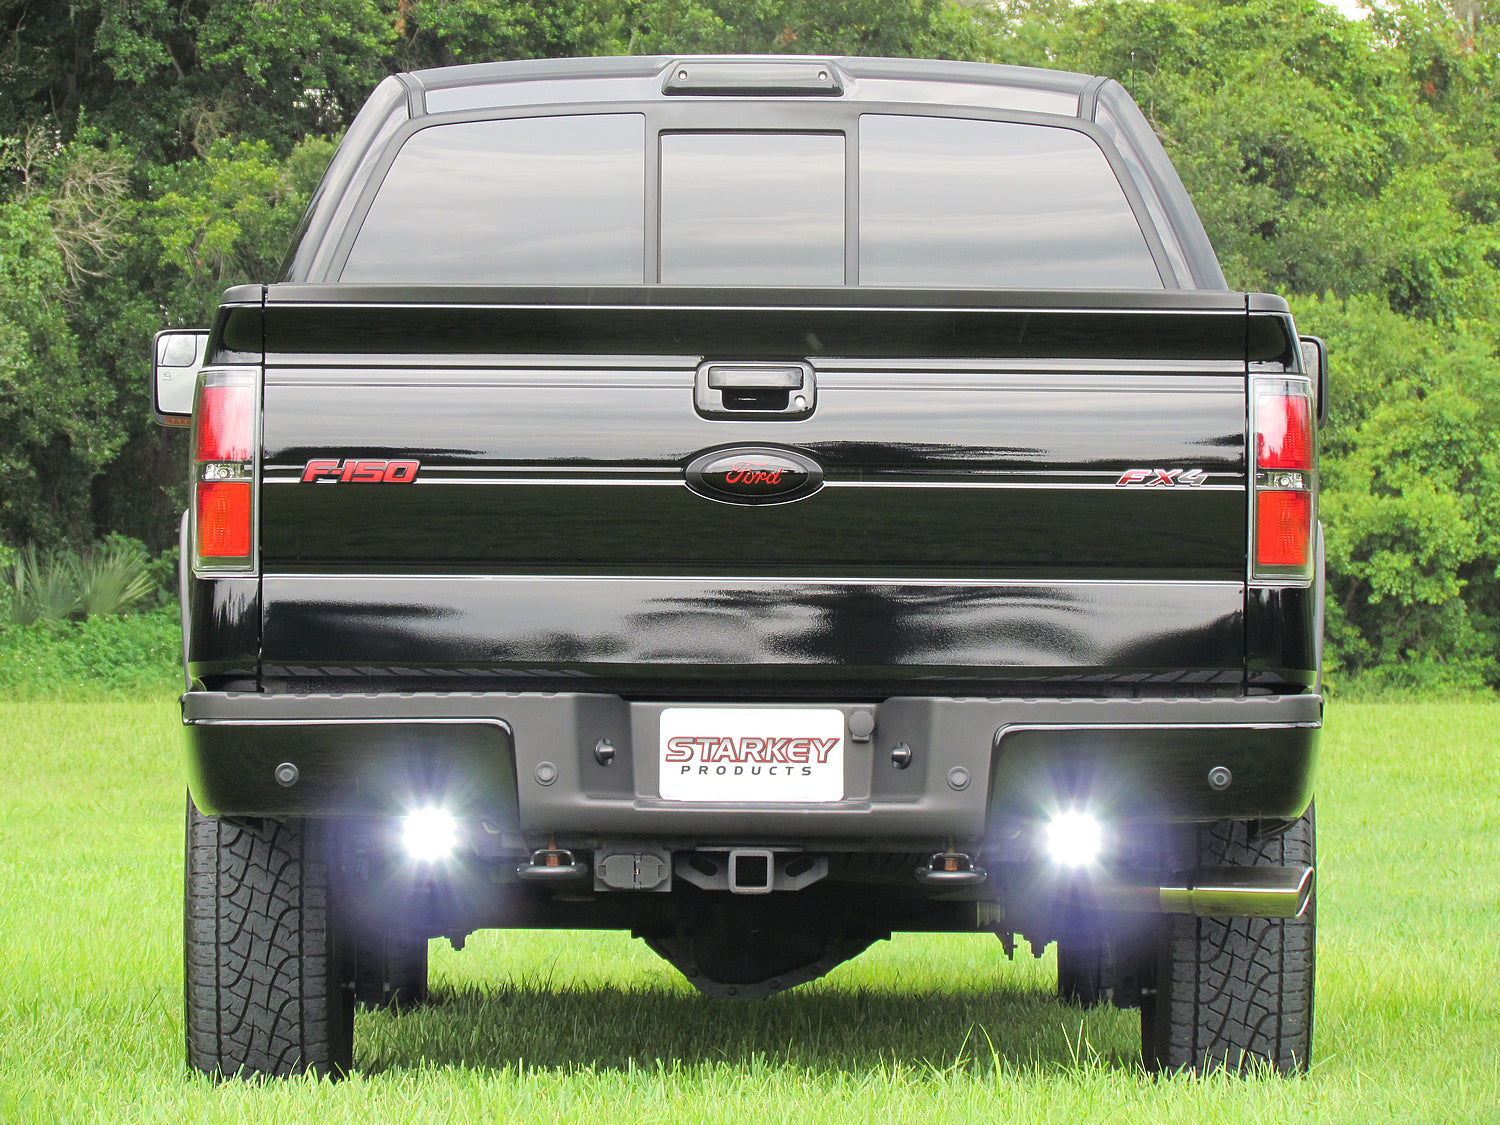 Rigid Backup/ Auxiliary Lighting Kit - Fits All Truck / SUV